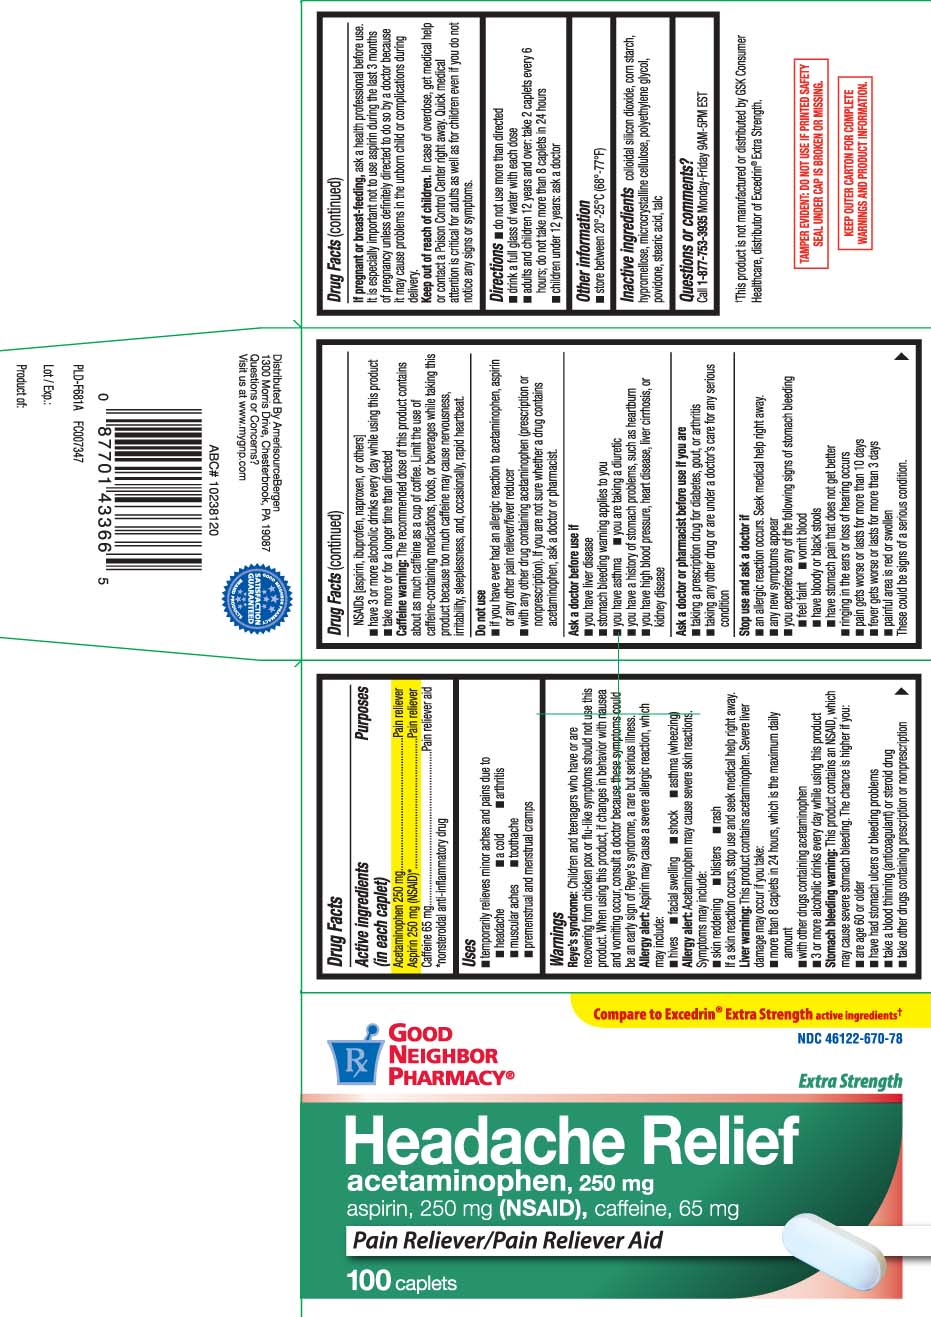 acetaminophen 250 mg, Aspirin 250 mg (NSAID)*, Caffeine 65 mg, *nonsteroidal anti-inflammatory drug